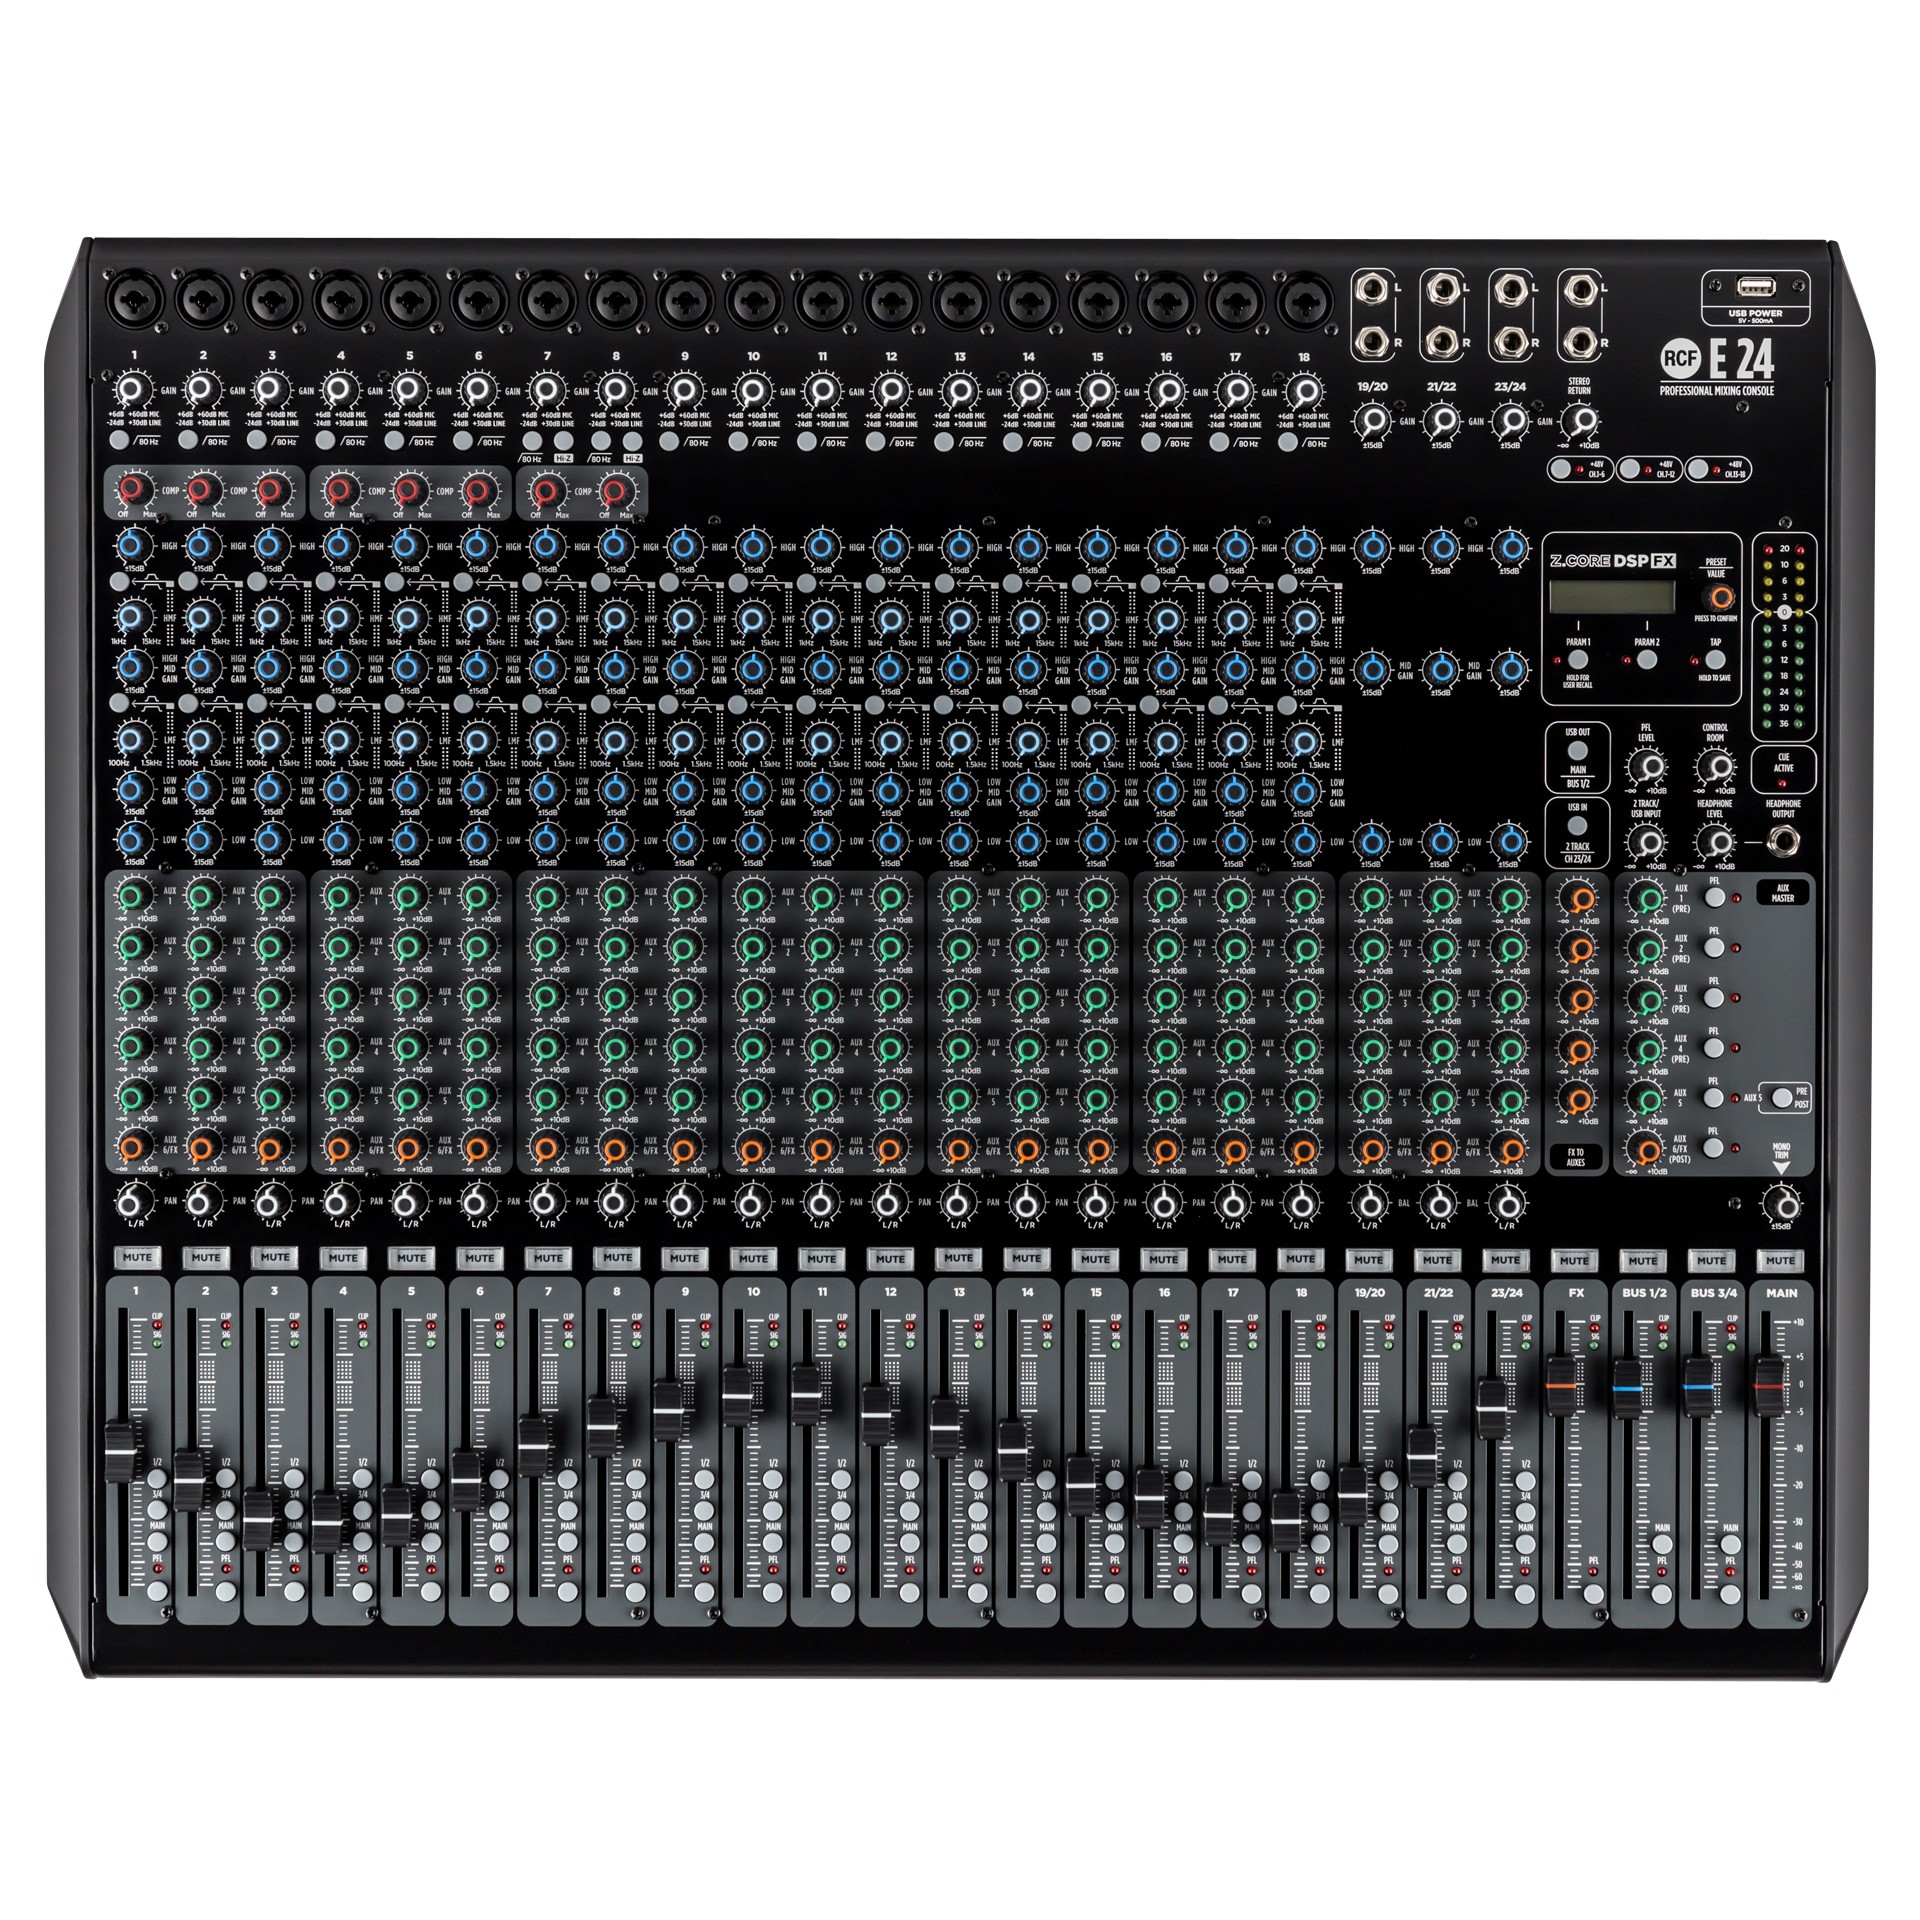 Mixere analogice - Mixer analog RCF E 24, audioclub.ro